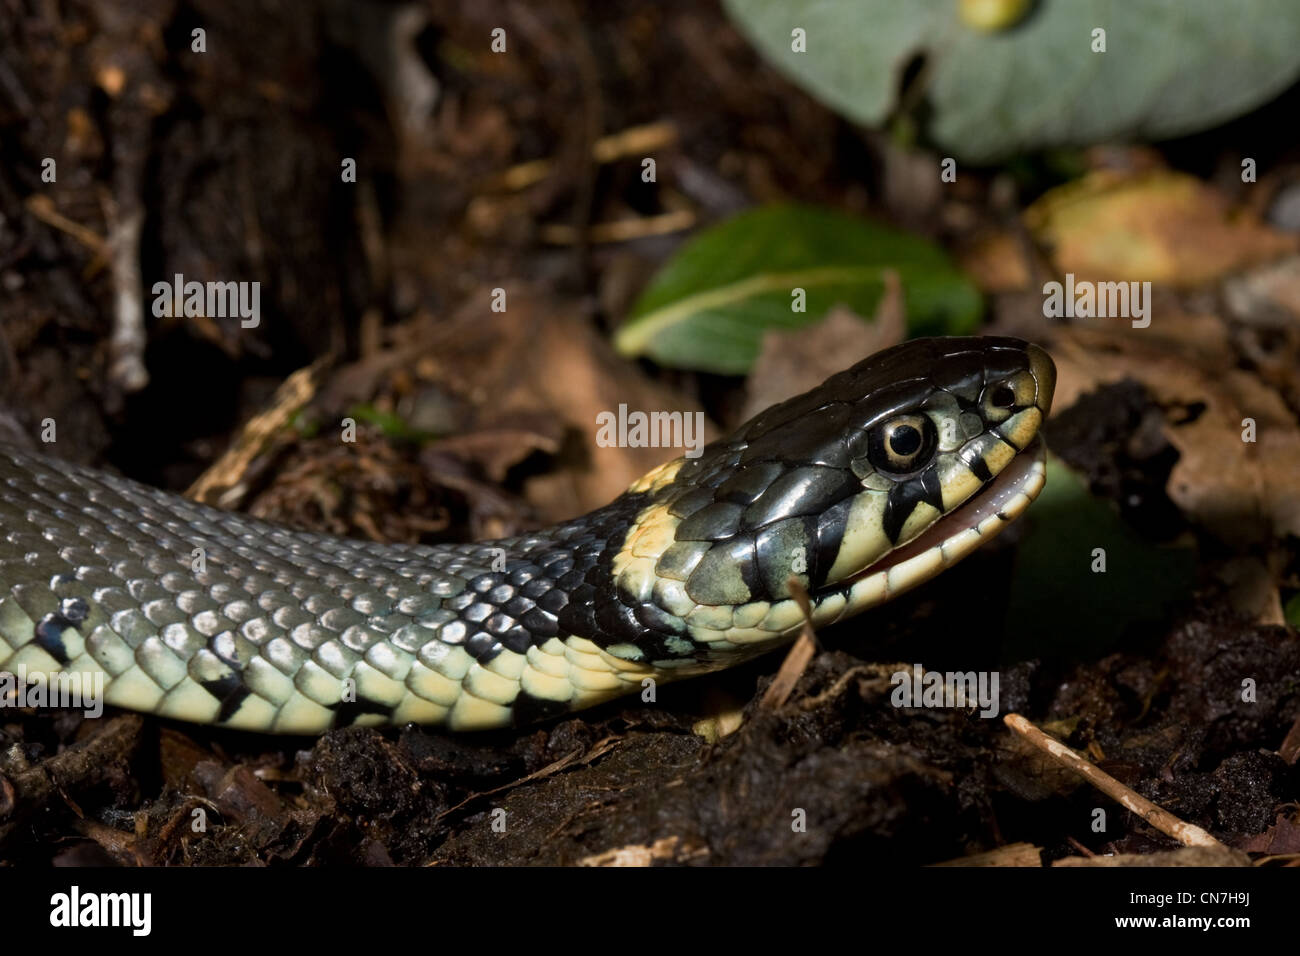 Grass snake (Natrix natrix) with open mouth Stock Photo